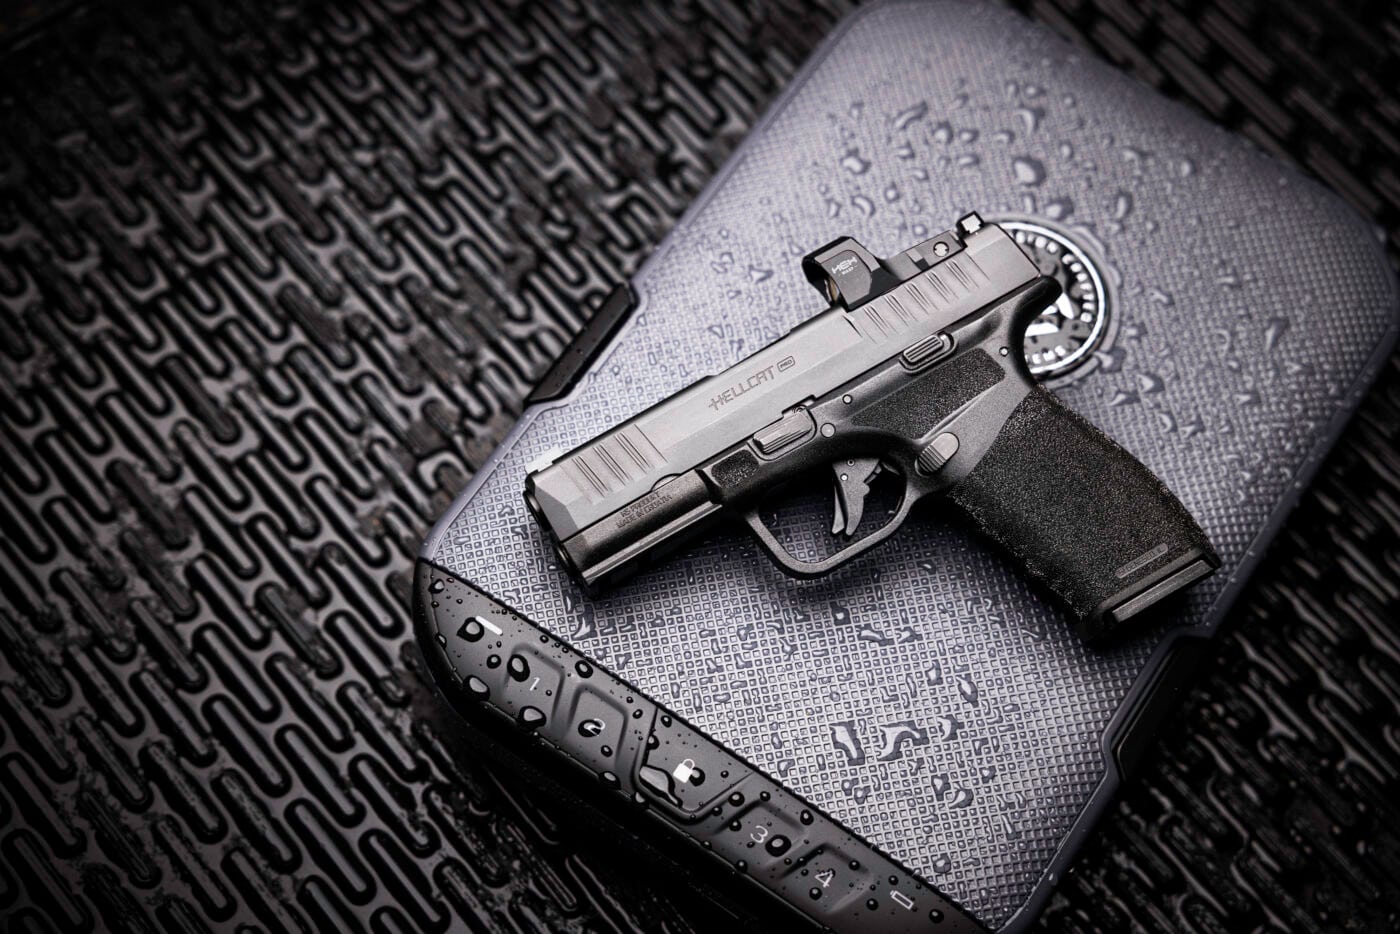 Springfield Armory Hellcat Pro pistol on top of a gun case